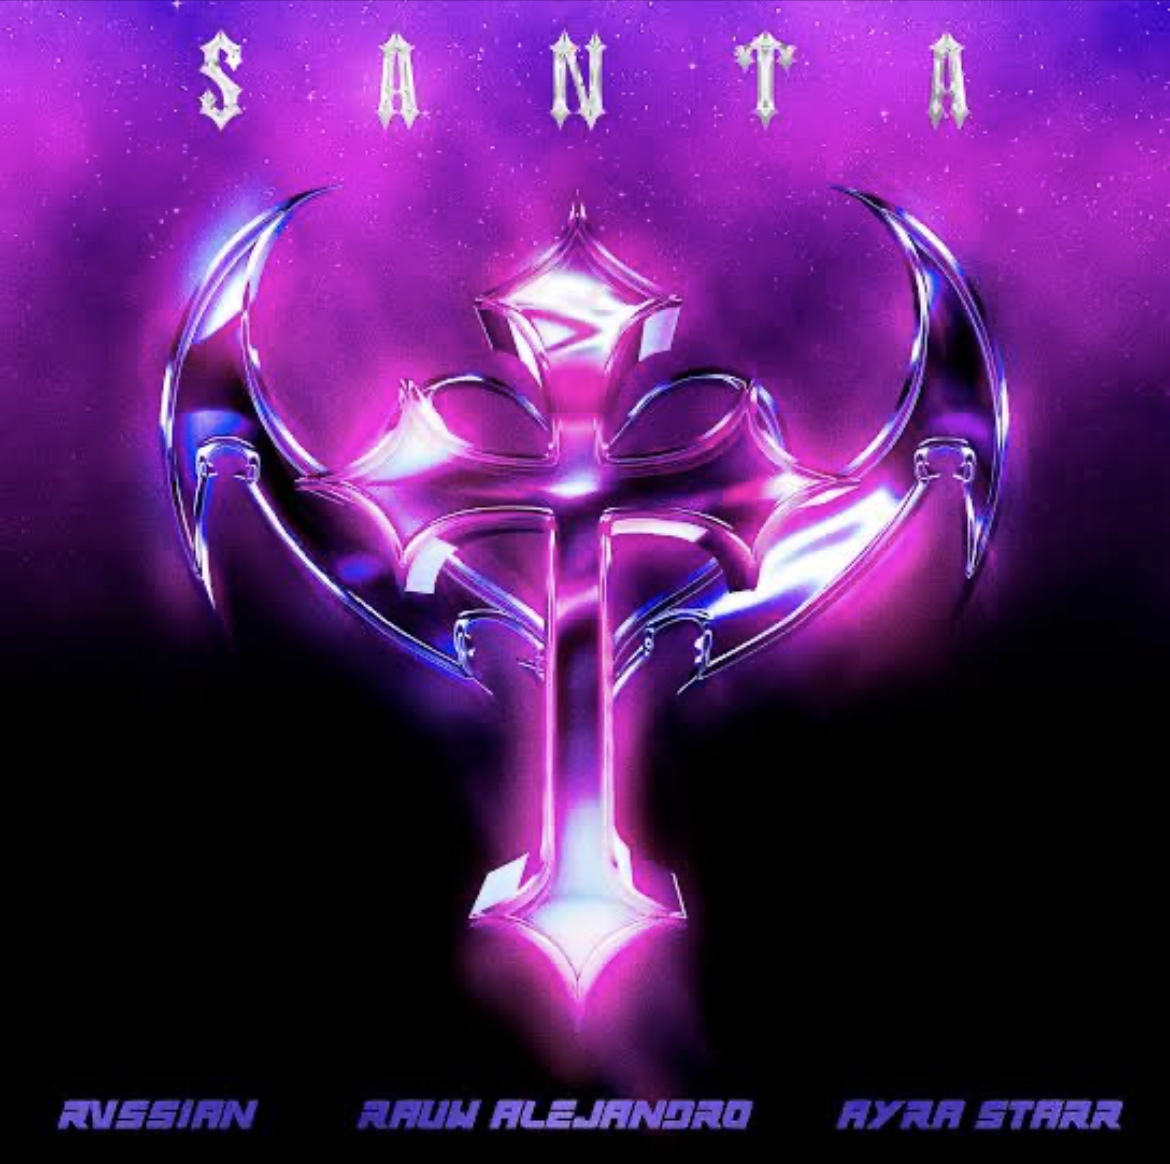 Rvssian - Santa ft Rauw Alejandro & Ayra Starr Mp3 download